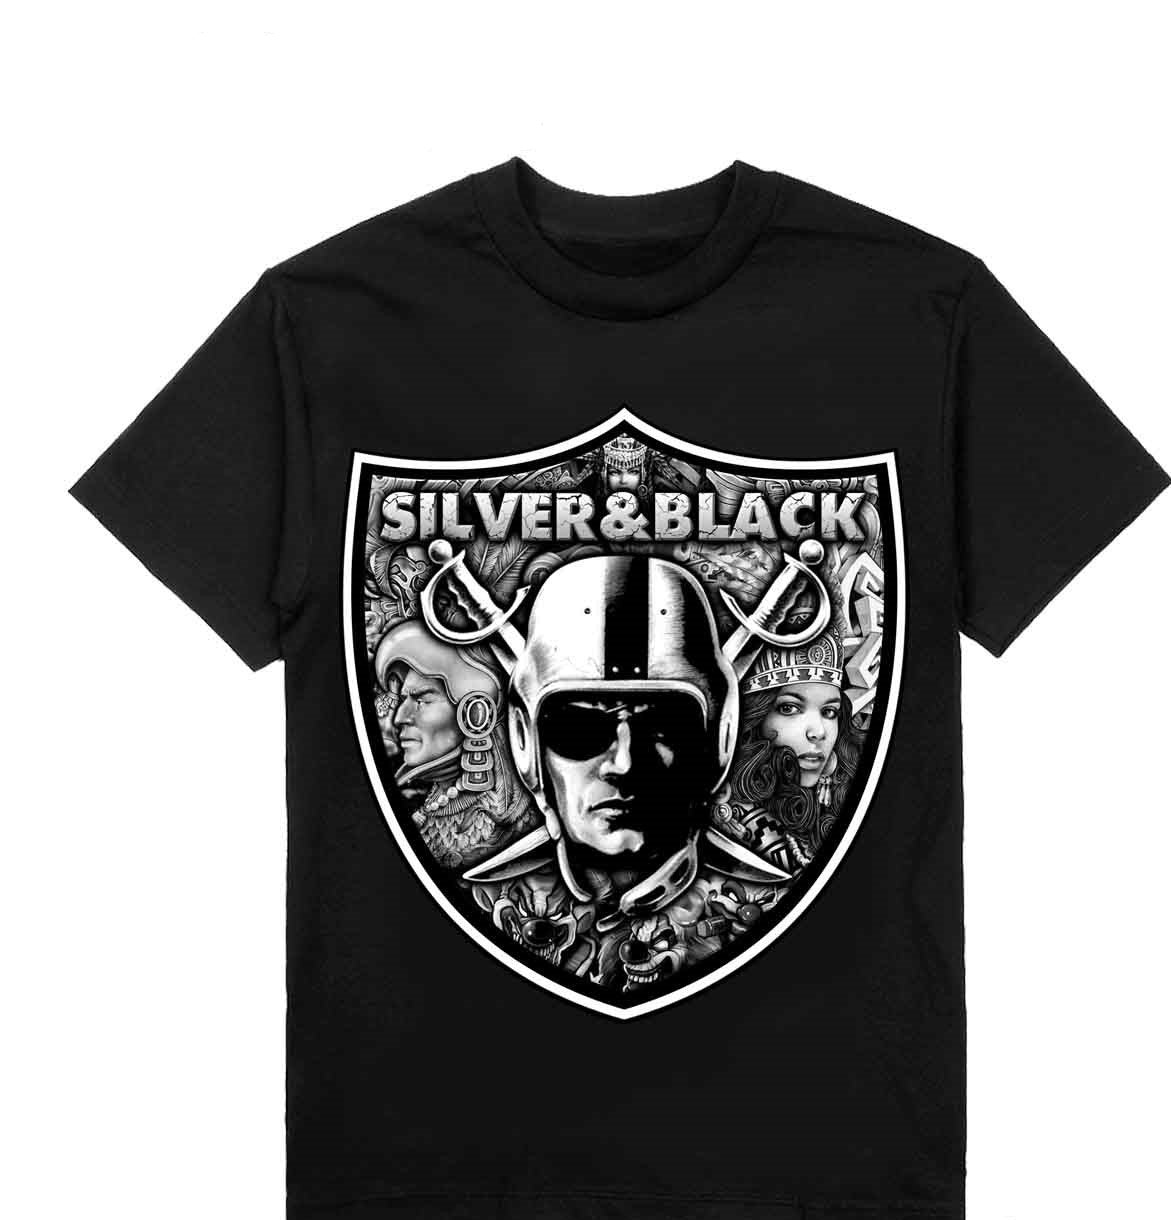 Raiders Black Graphic T Shirt Dress